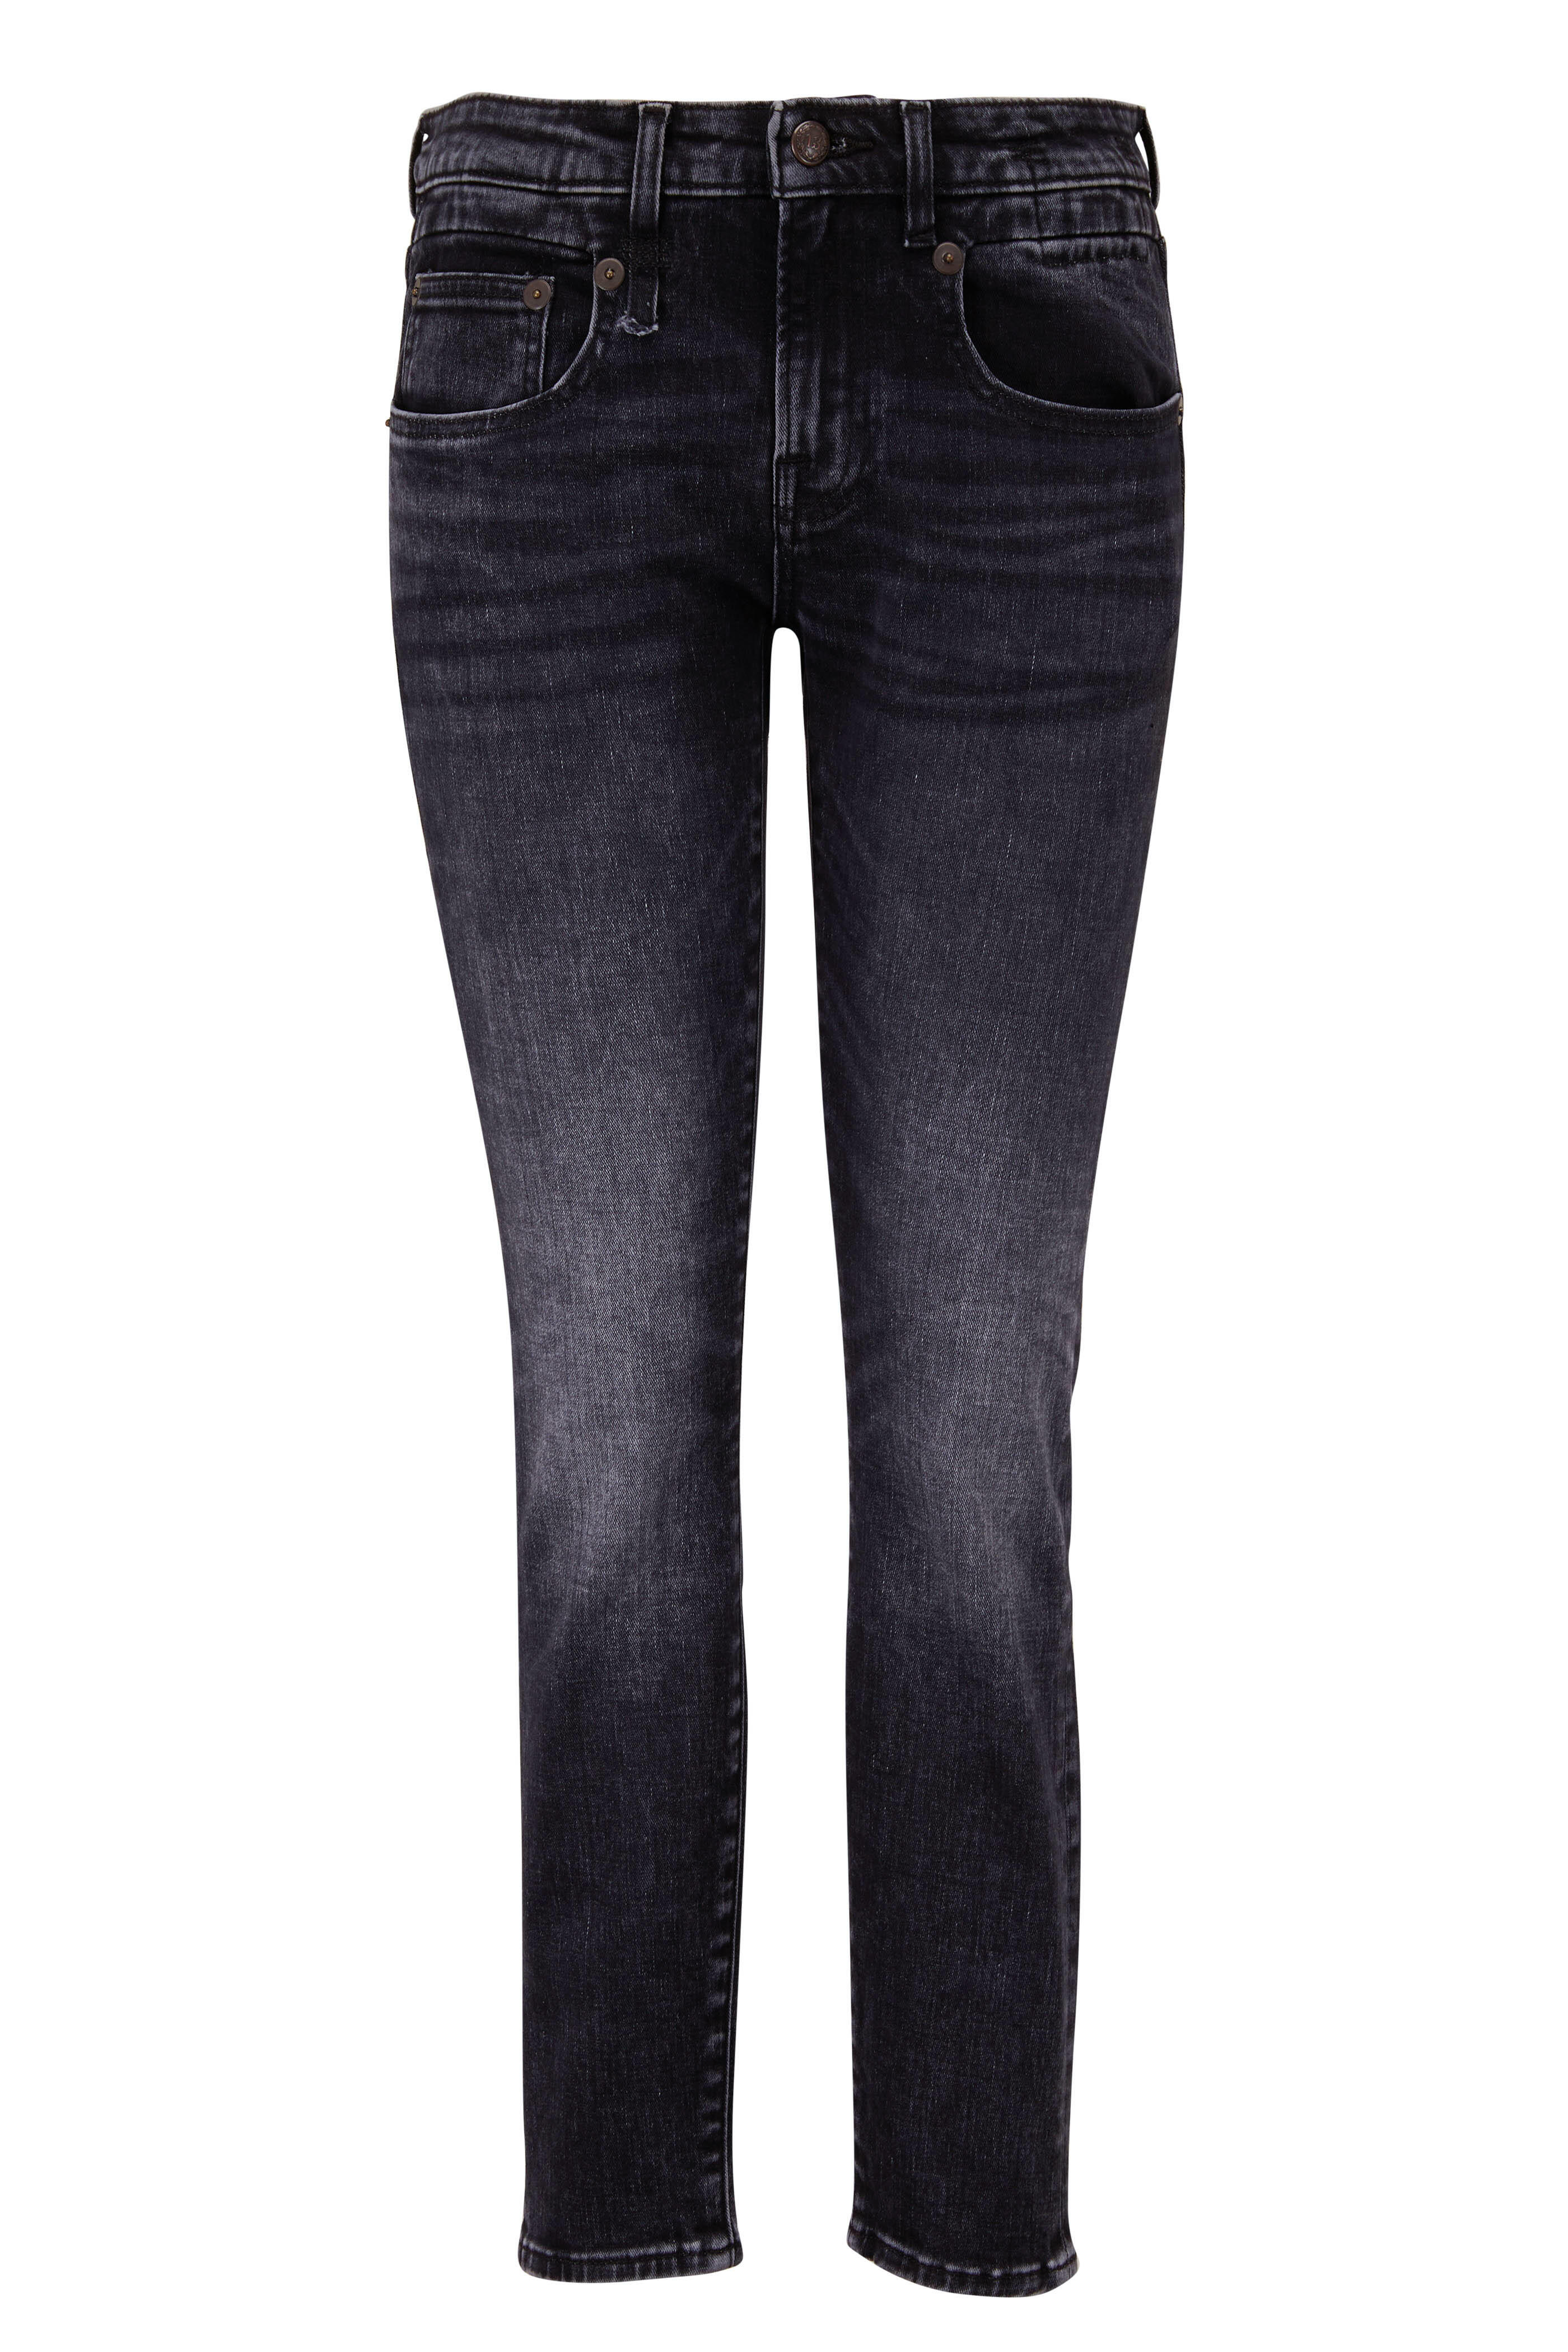 R13 - Boy Skinny Morrison Black Five Pocket Jean